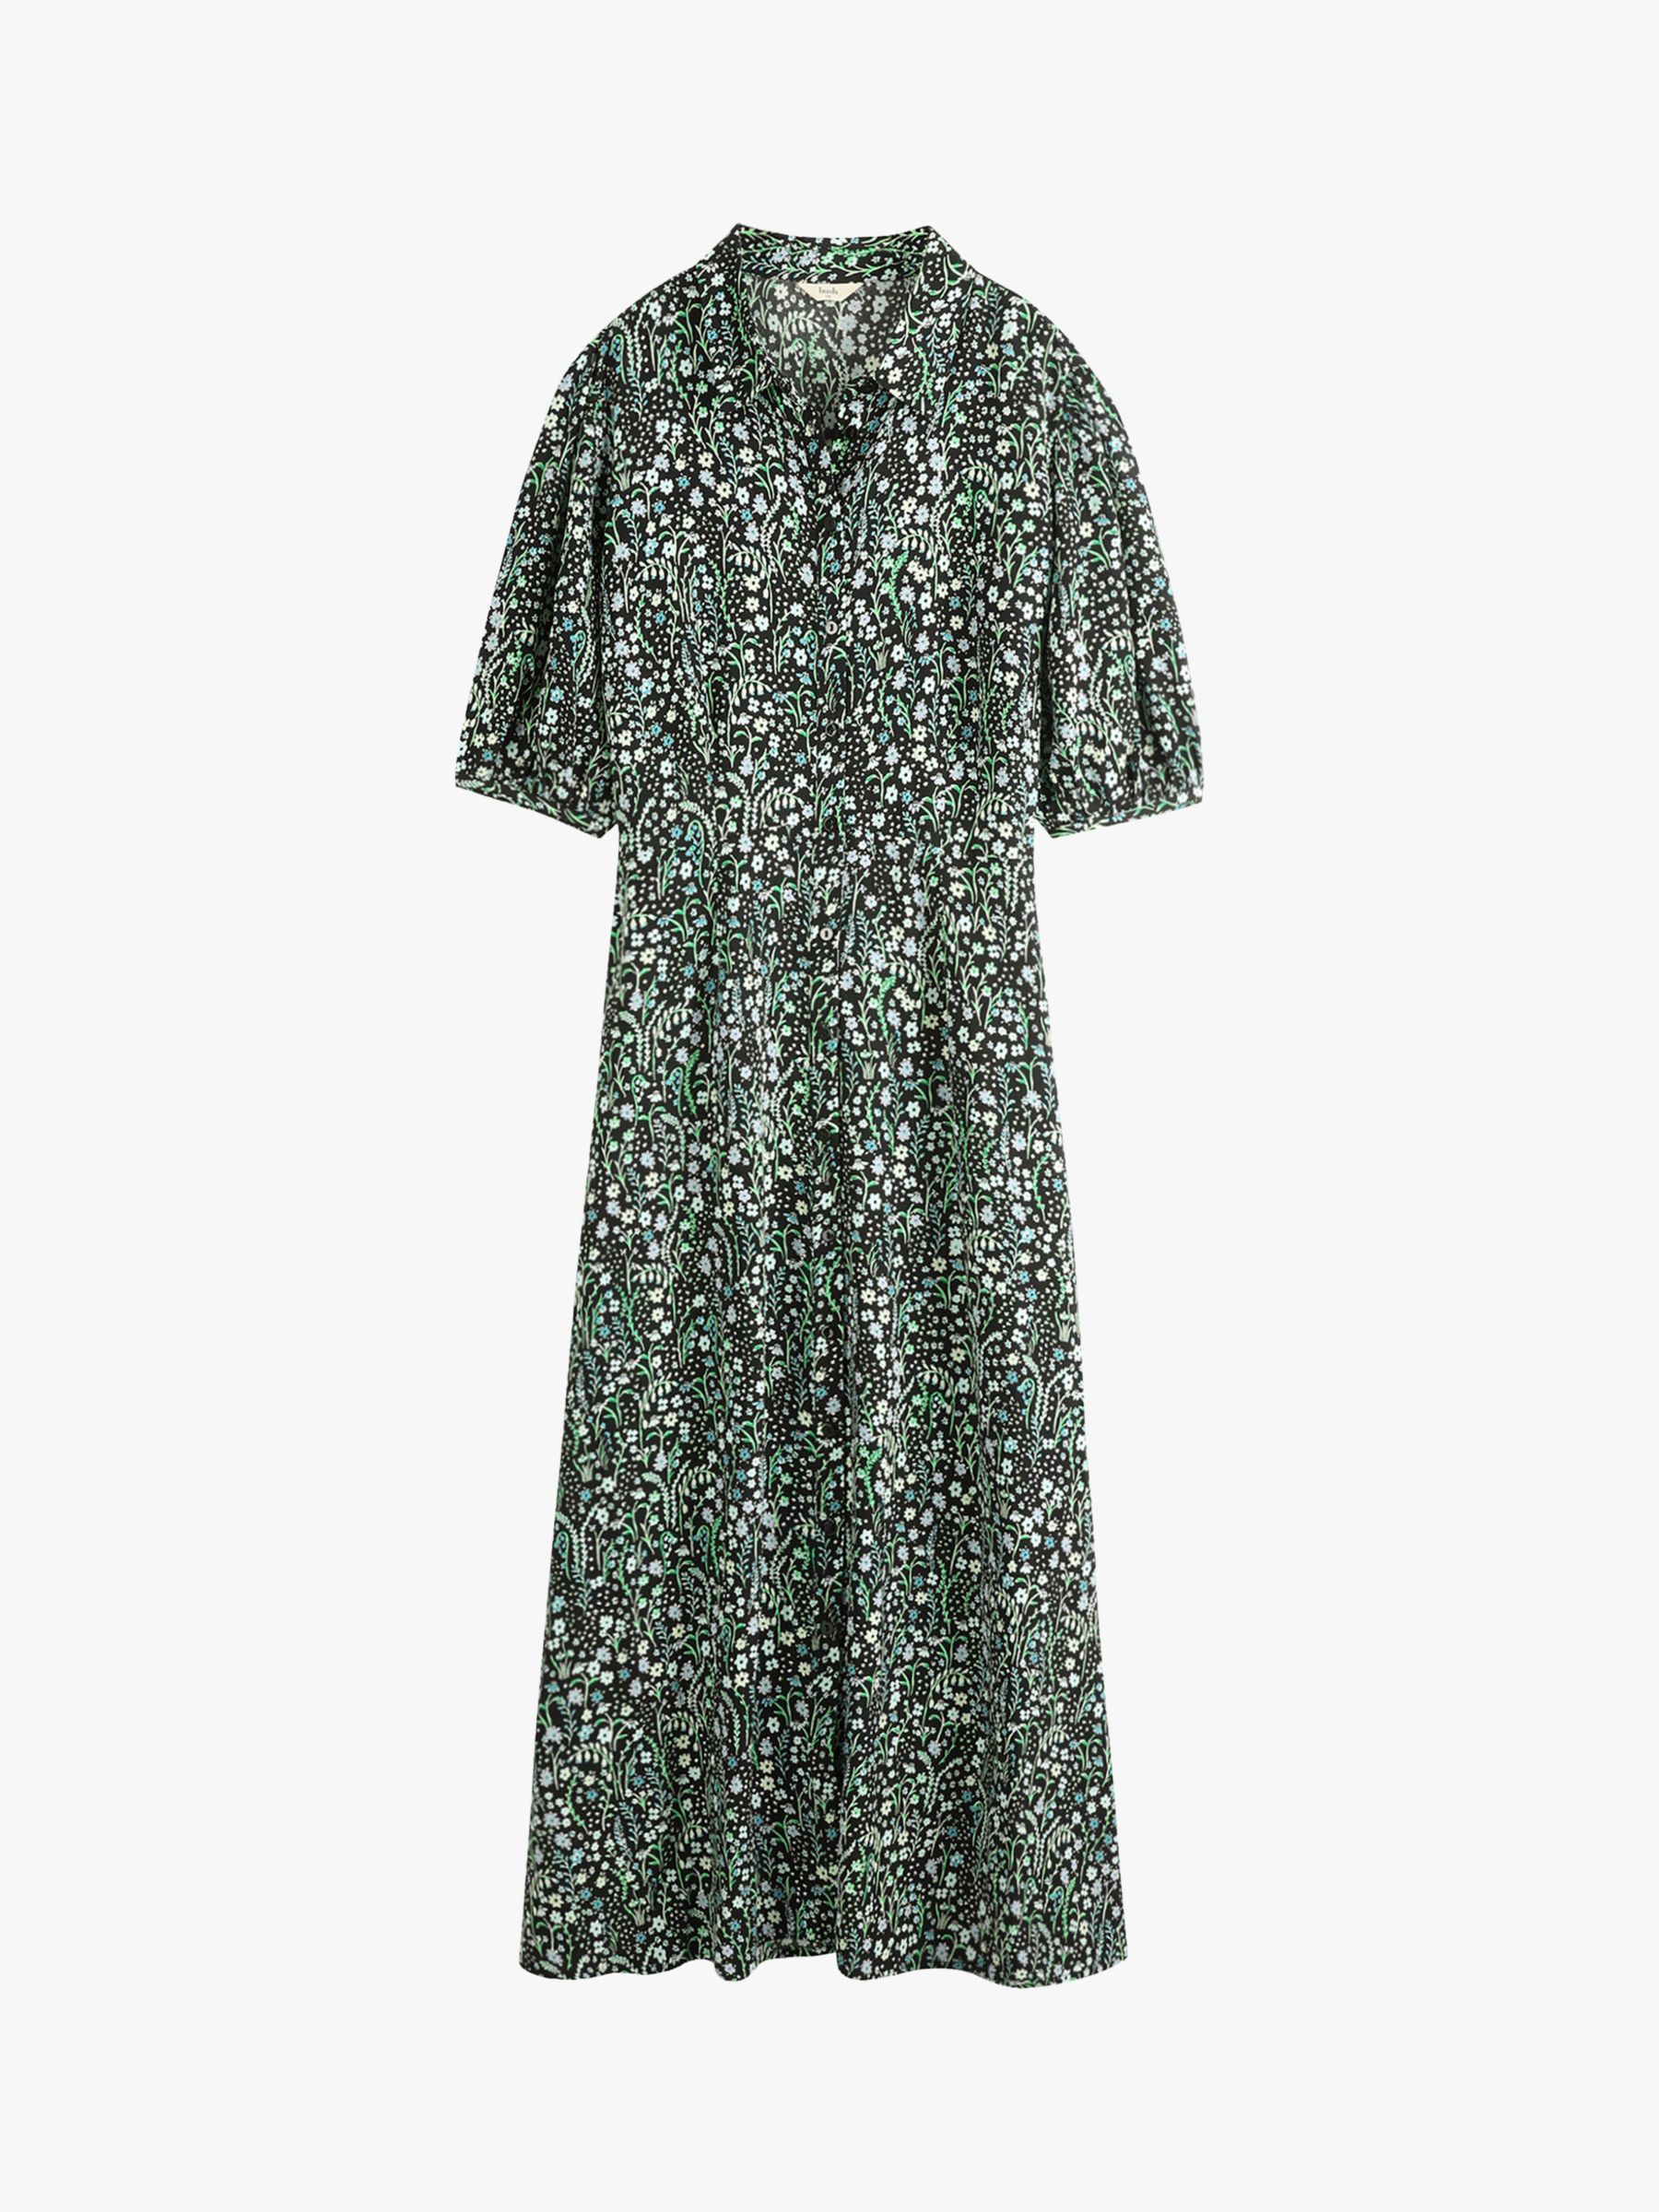 hush Sienna Ditsy Garden Floral Midi Shirt Dress, Multi